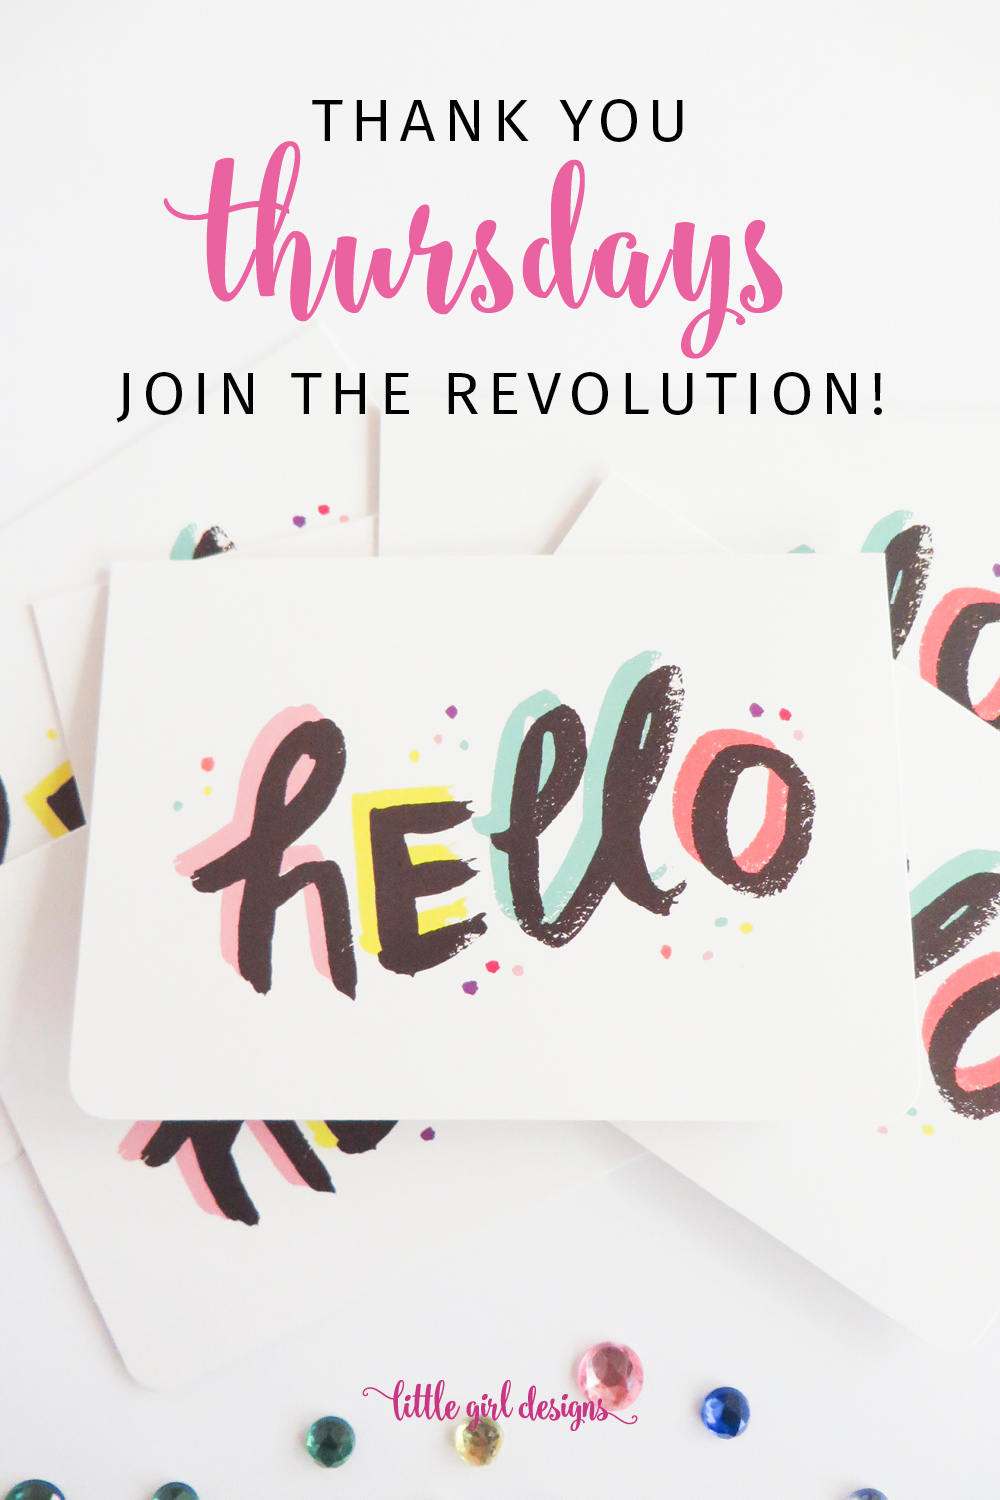 Thank You Thursdays (Join the Revolution!)